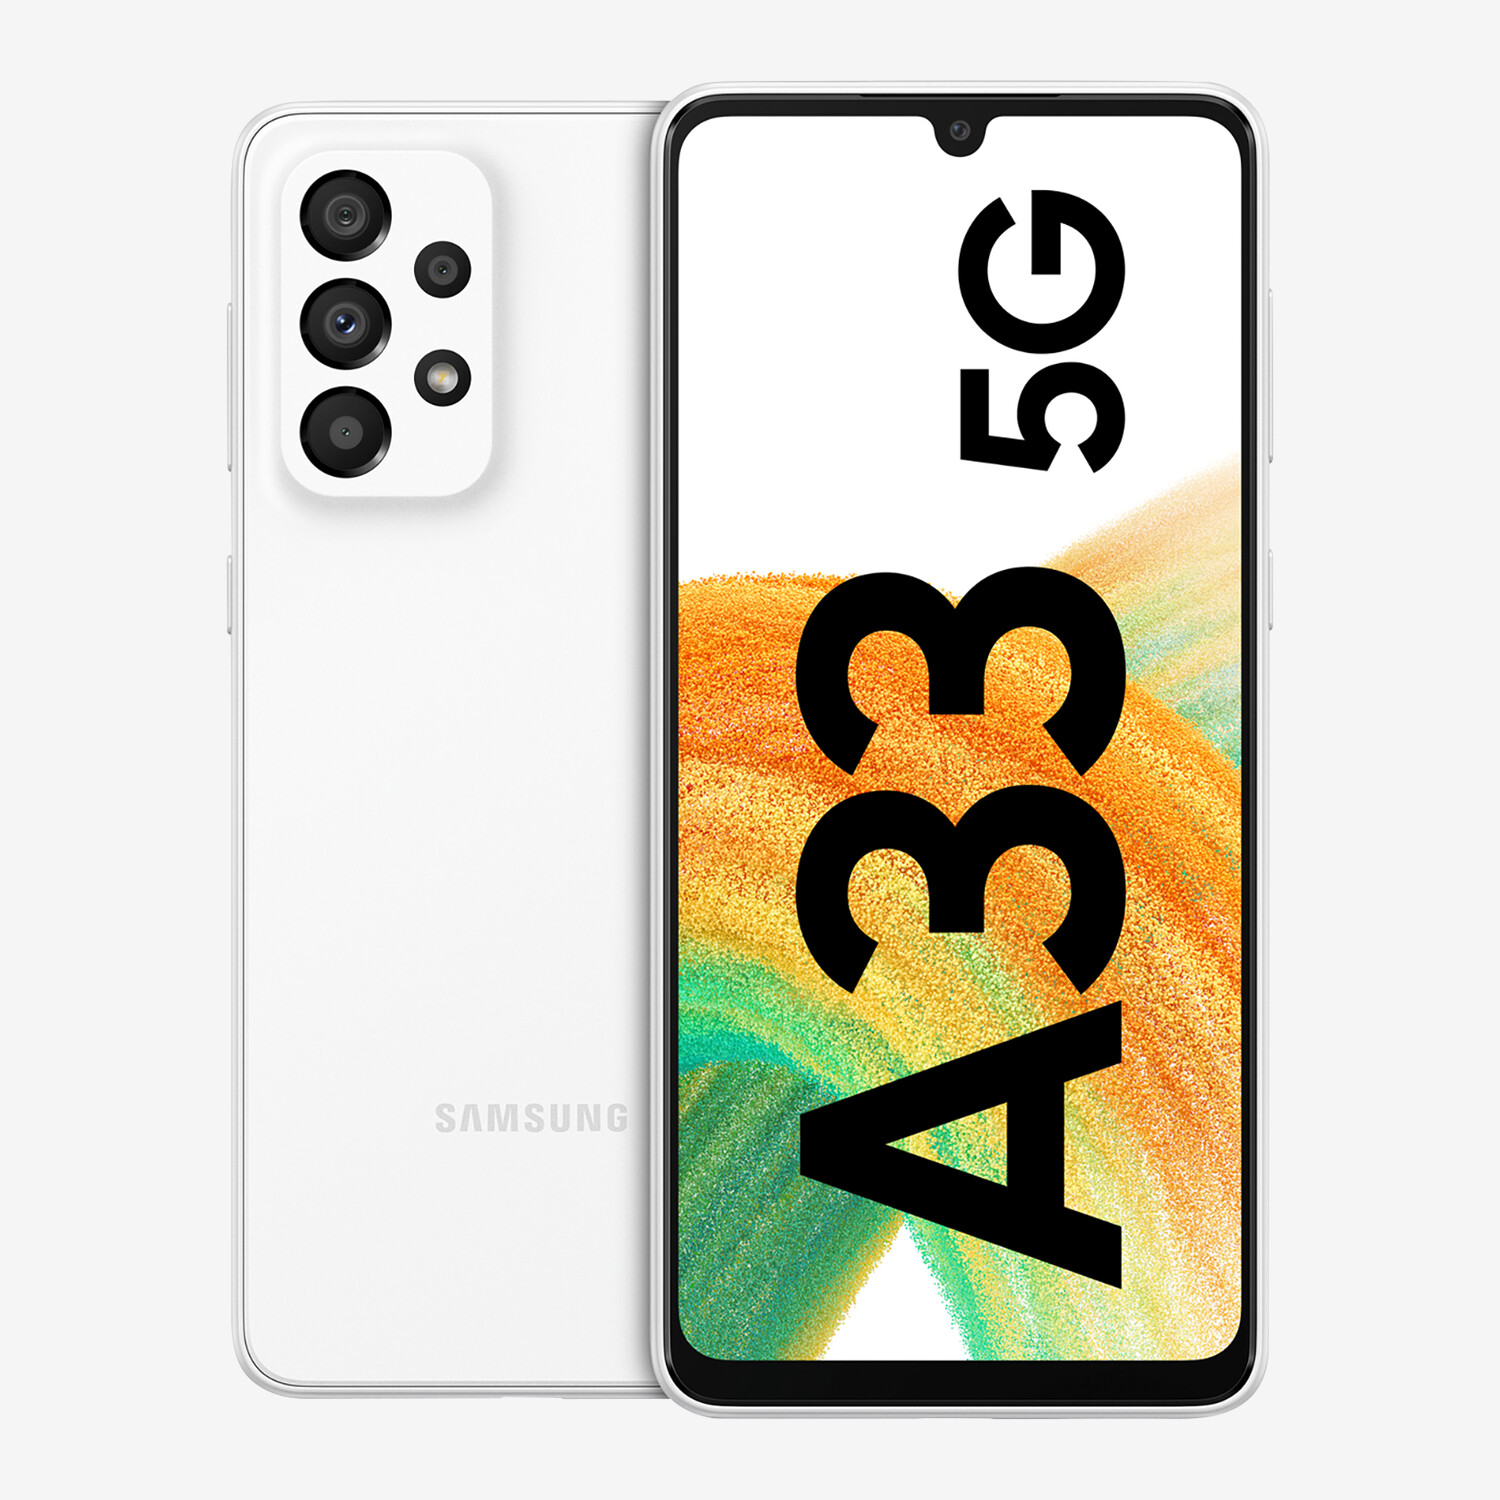 samsung-galaxy-a33-5g-smartphone-128gb-awesome-white